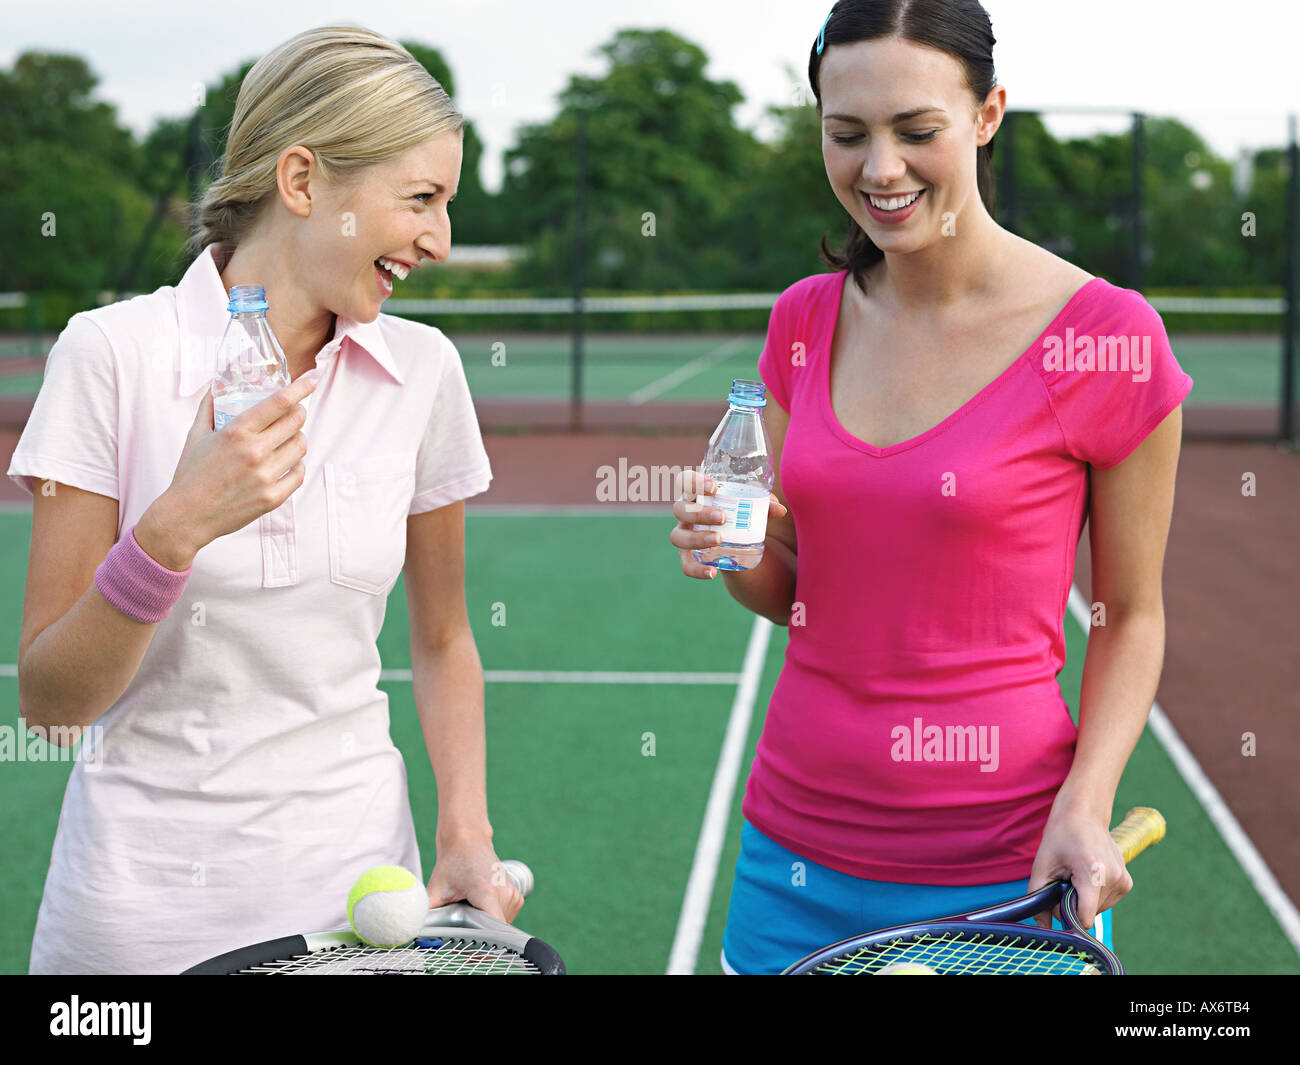 Women having fun on tennis court Stock Photo